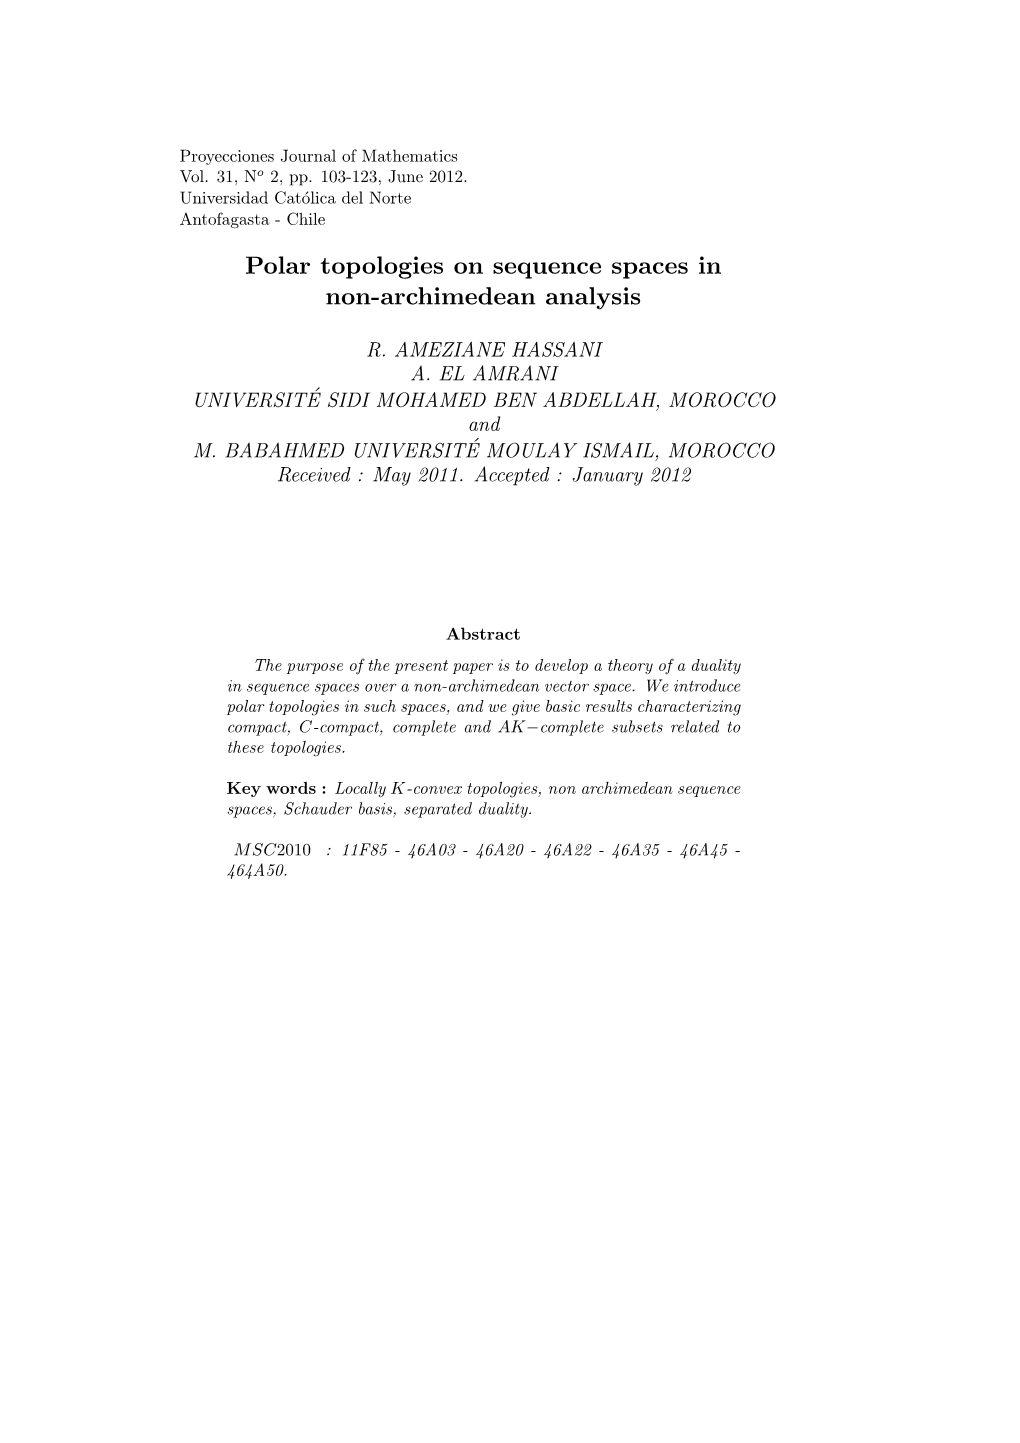 Polar Topologies on Sequence Spaces in Non-Archimedean Analysis